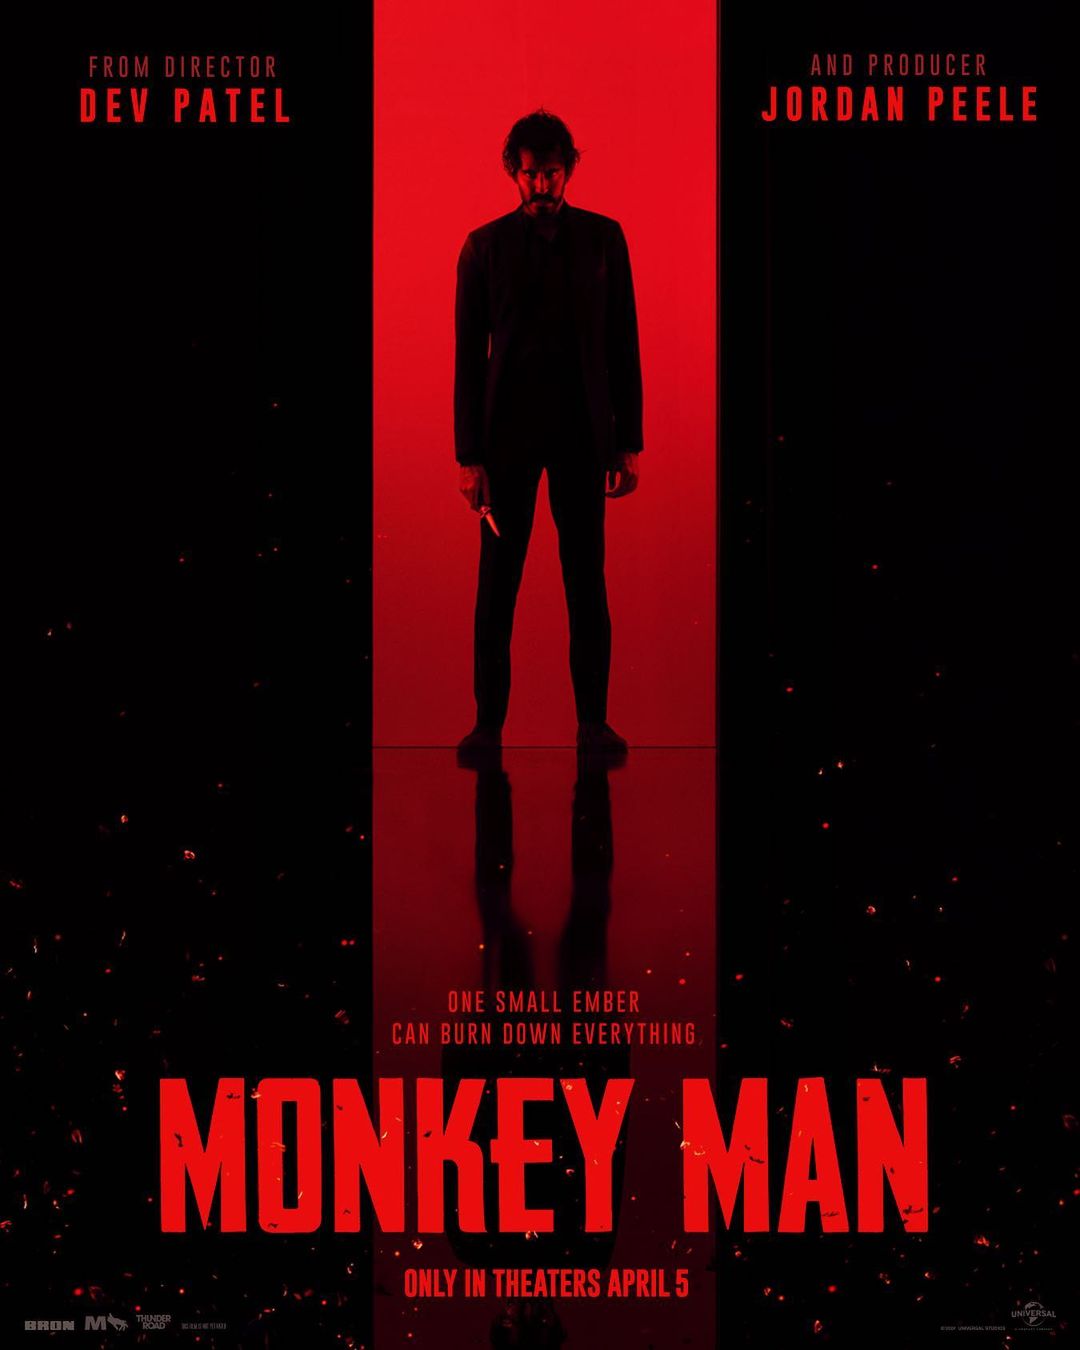 Monkey Man Movie Poster